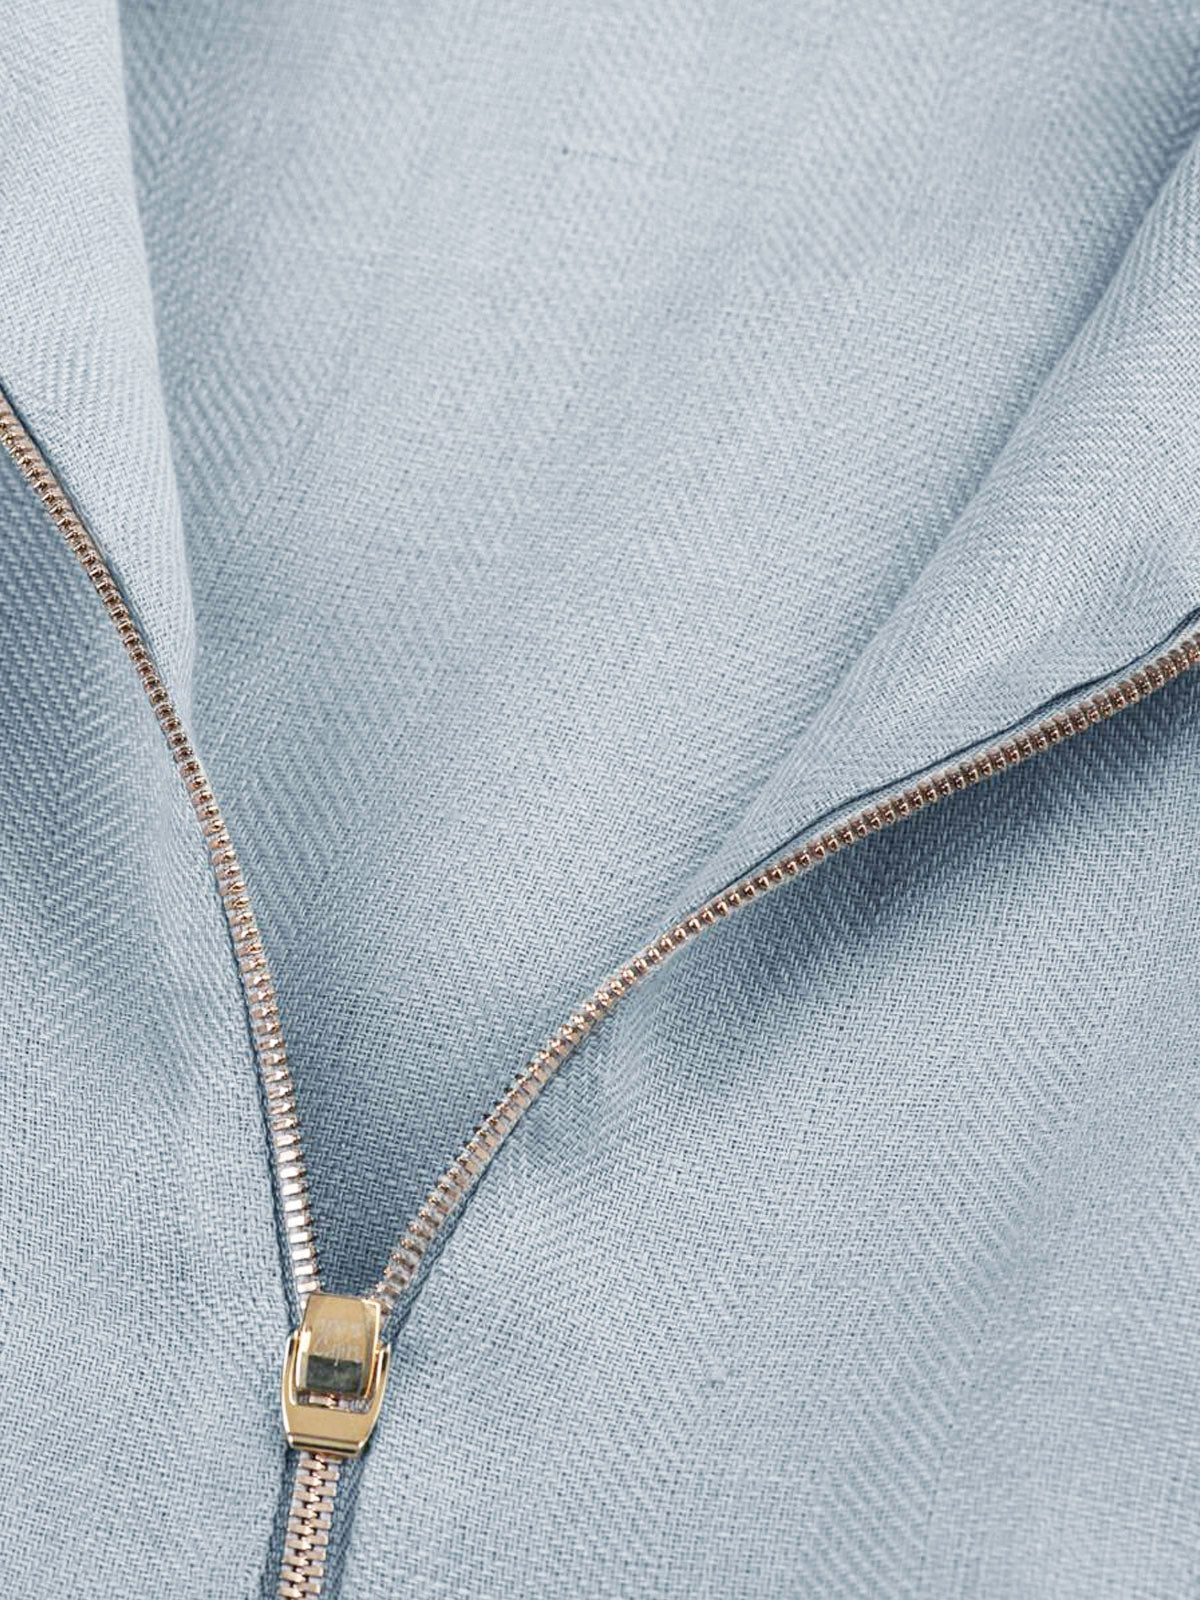 Tuta Zip  for woman 100% Capri aquamarine linen jumpsuit detail